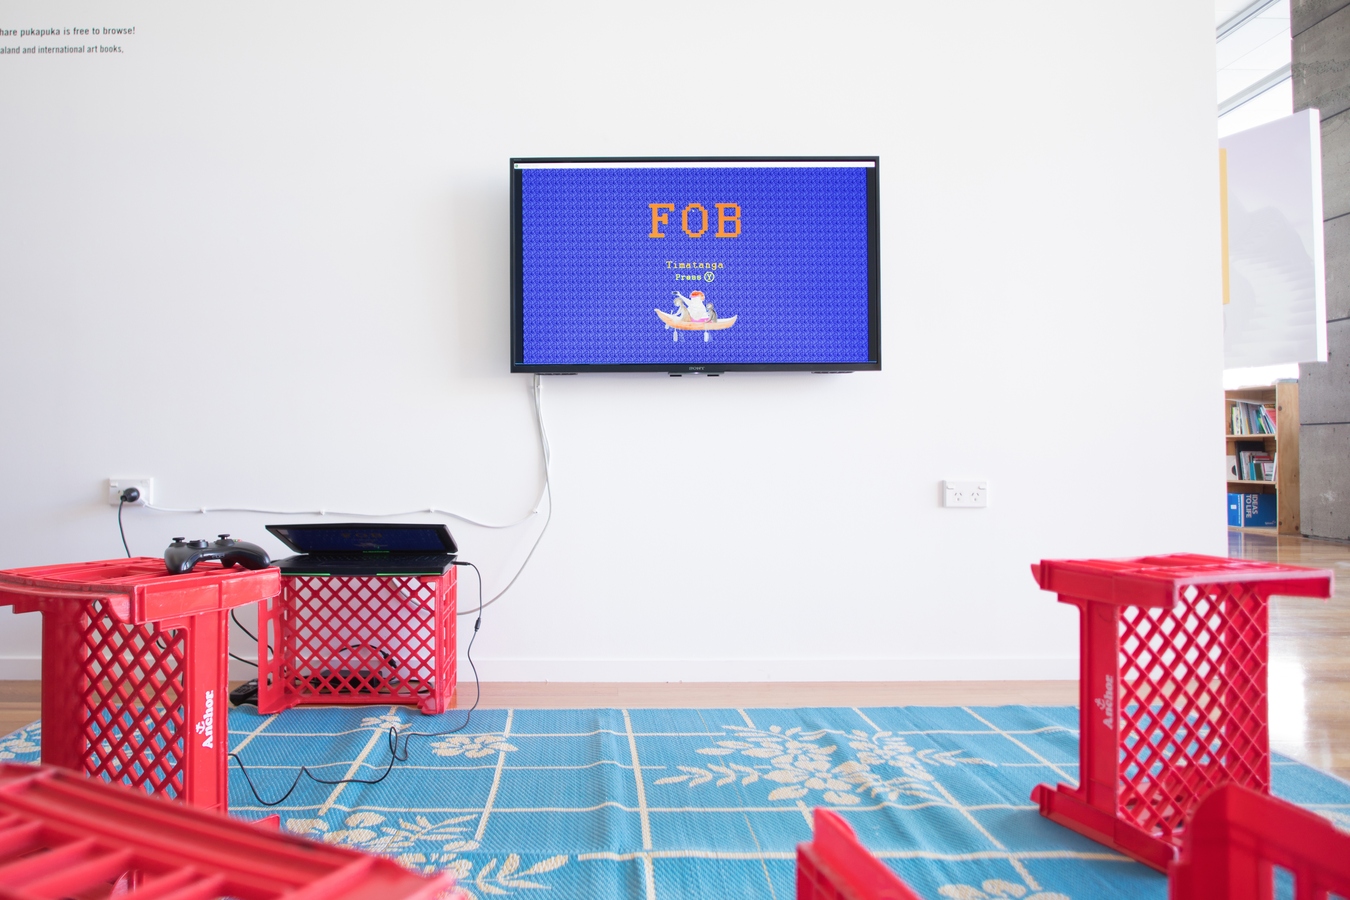 Image: Kahurangiariki Smith, FOB (installation view), 2016, video game, TV, controller, milk crates, mat. Interactive installation. Photo: Janneth Gil.